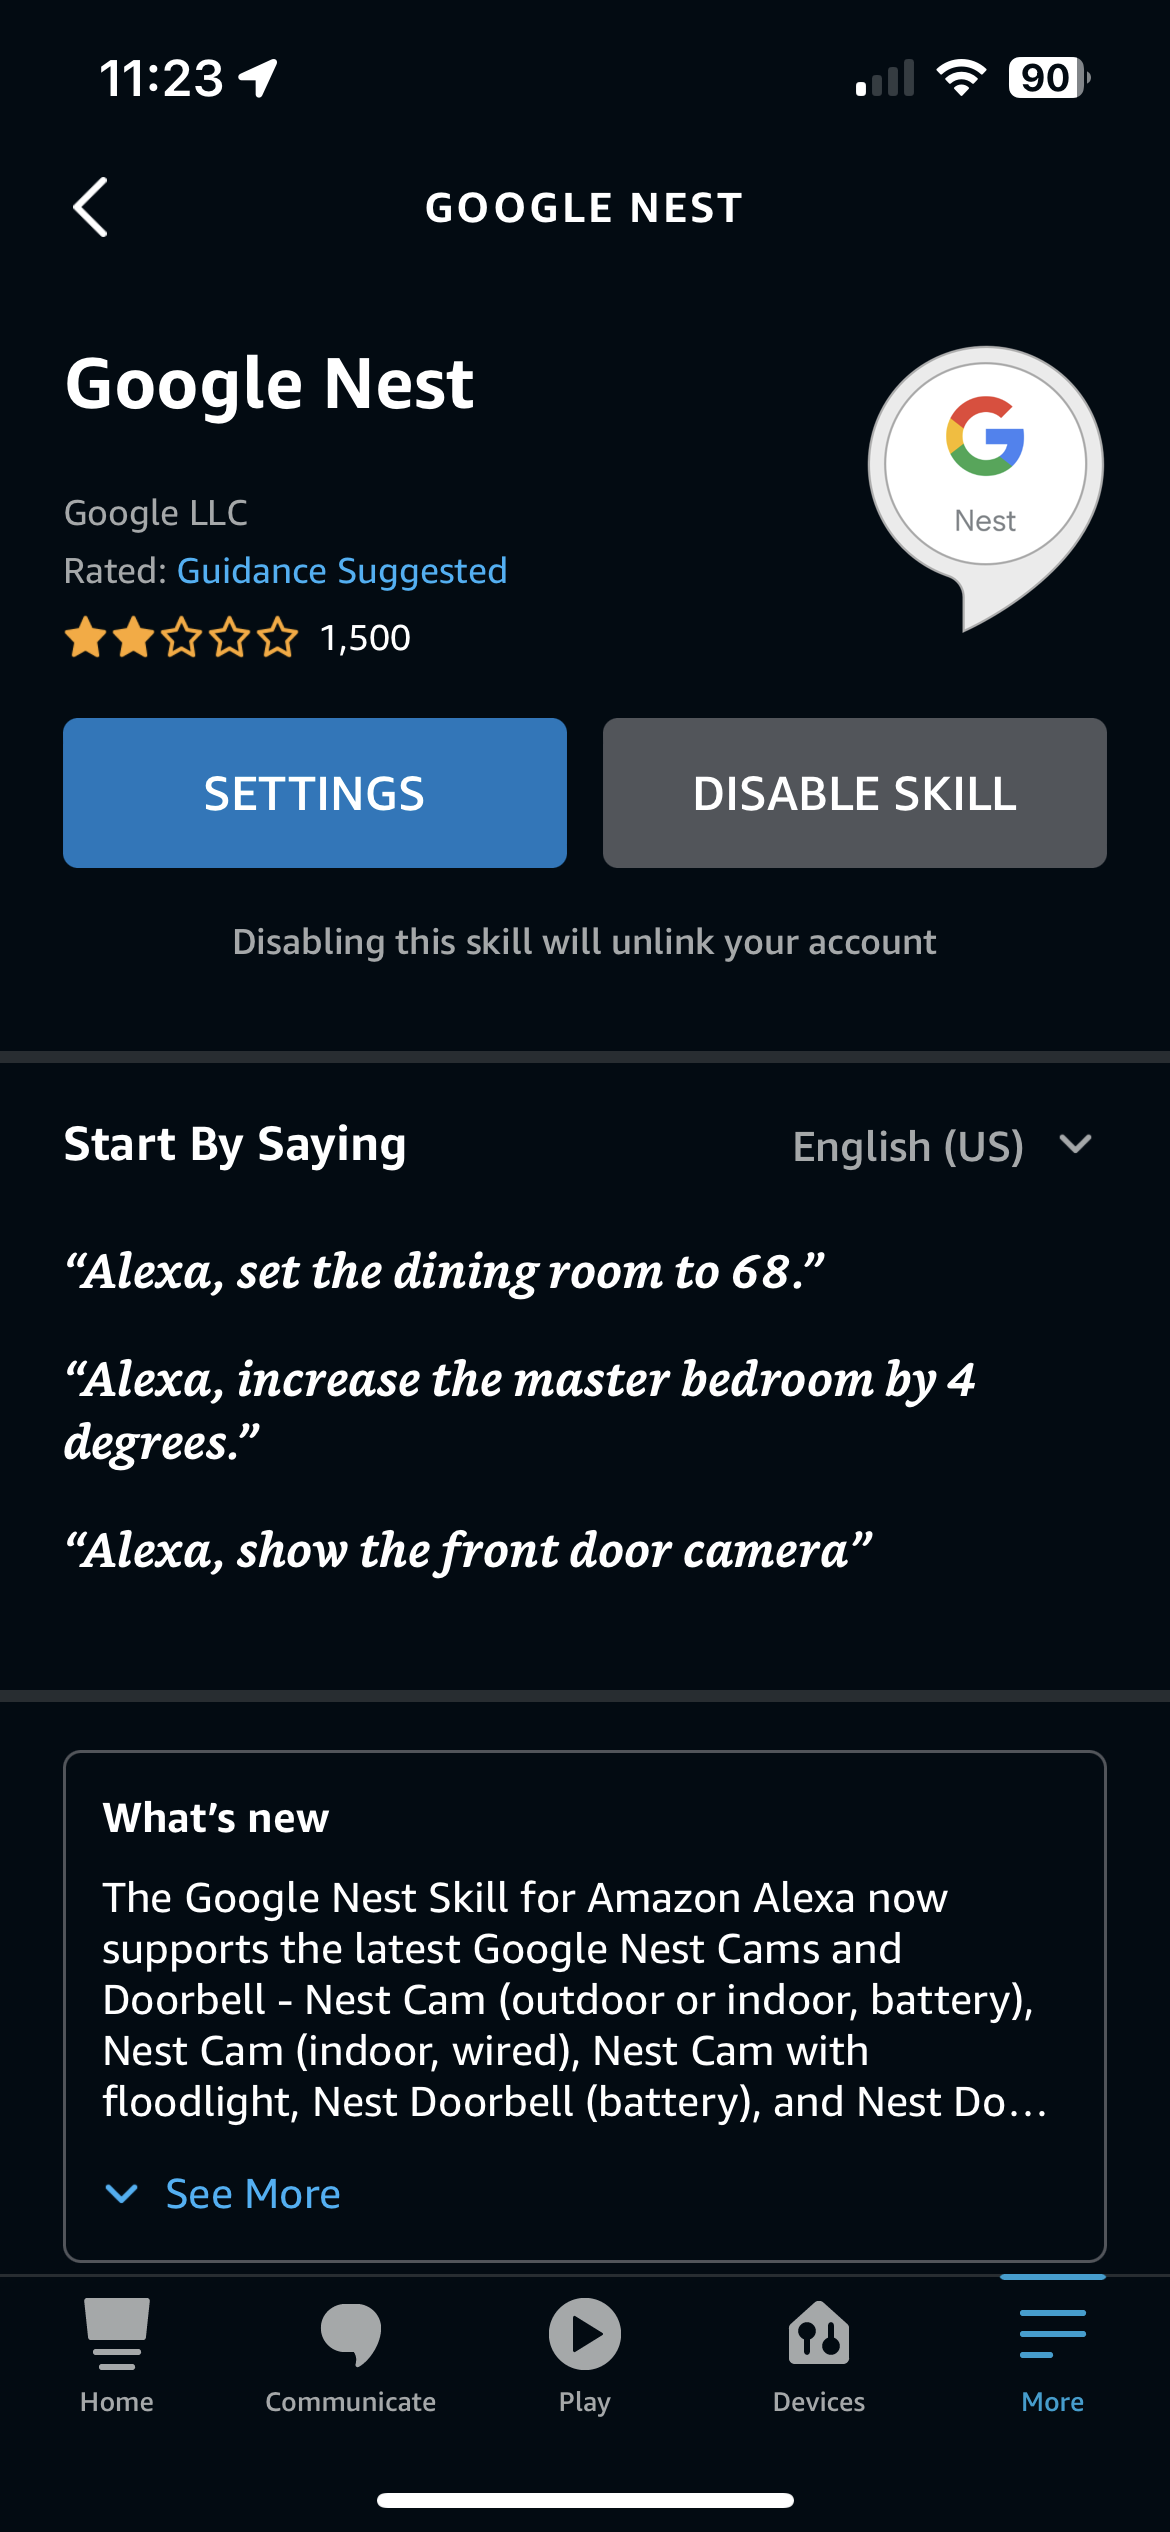 The Google Nest Alexa skill